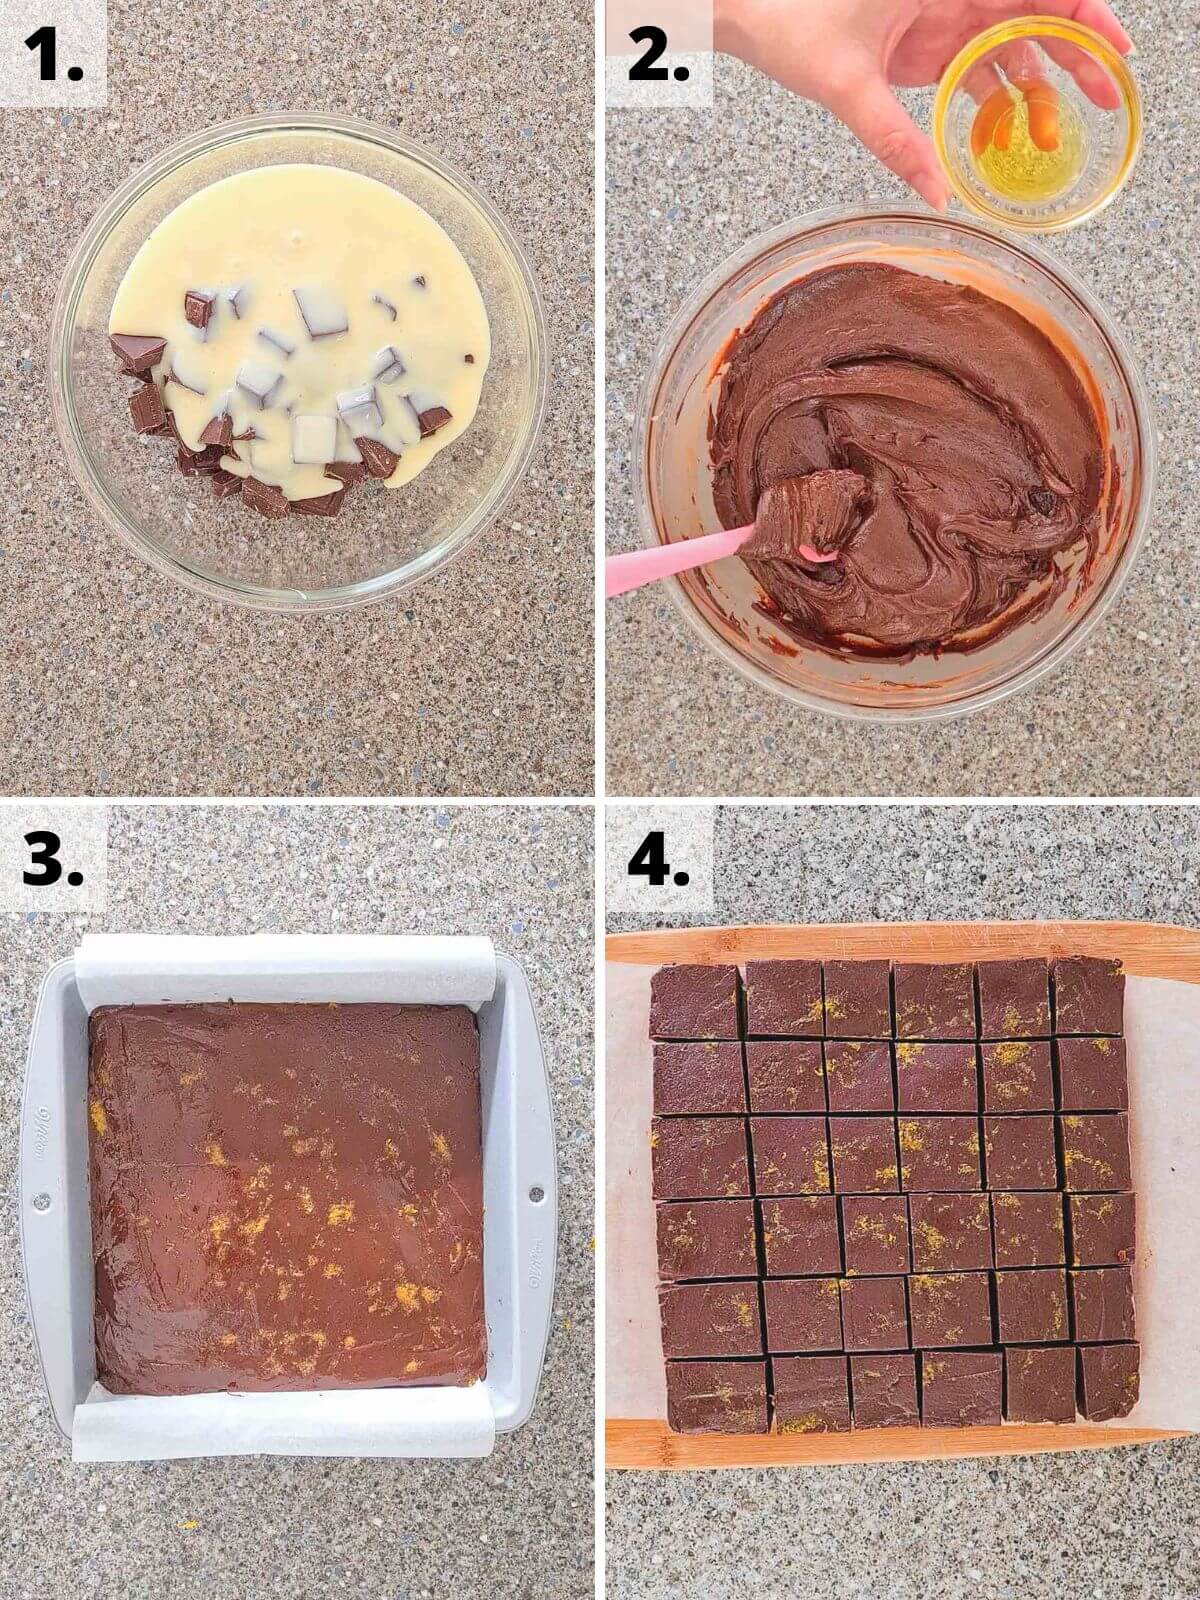 chocolate orange fudge recipe method steps 1 to 4.